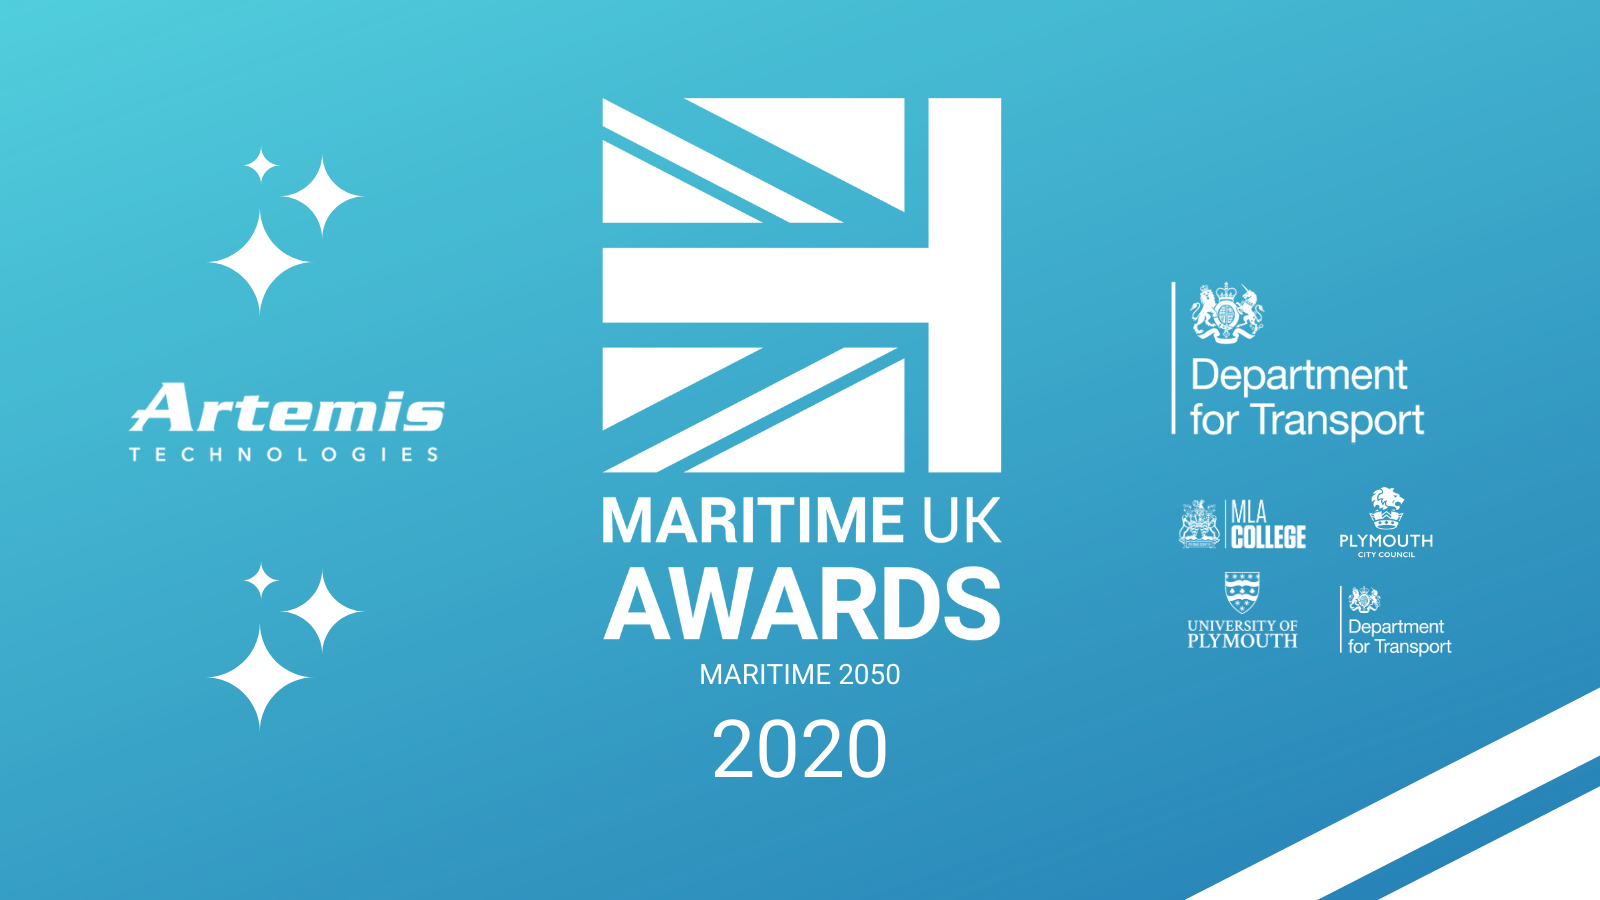 Artemis Technologies awarded with Maritime 2050 award at 2020 Maritime UK awards